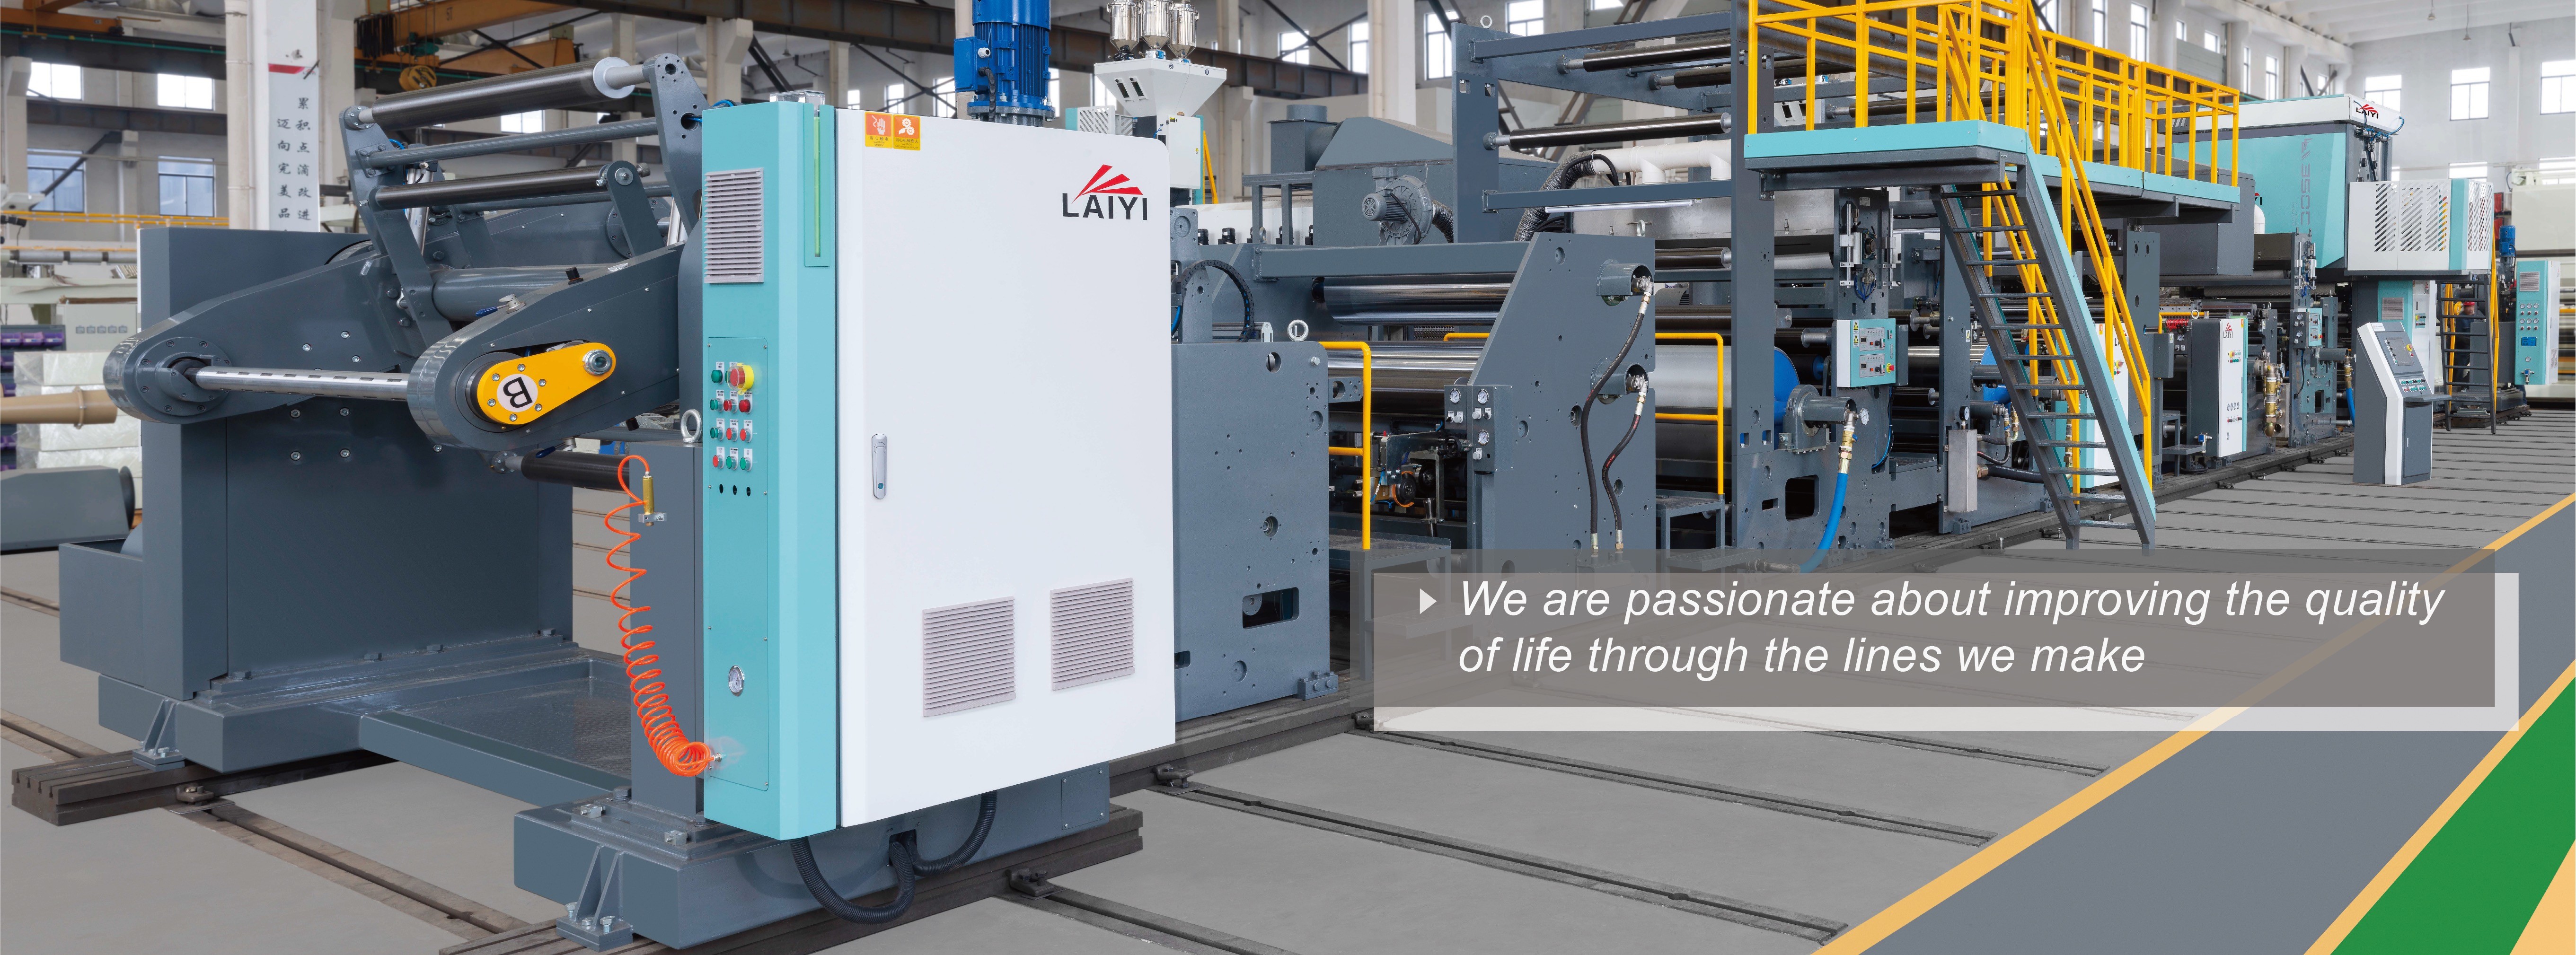 quality Extrusion Coating Lamination Machine factory